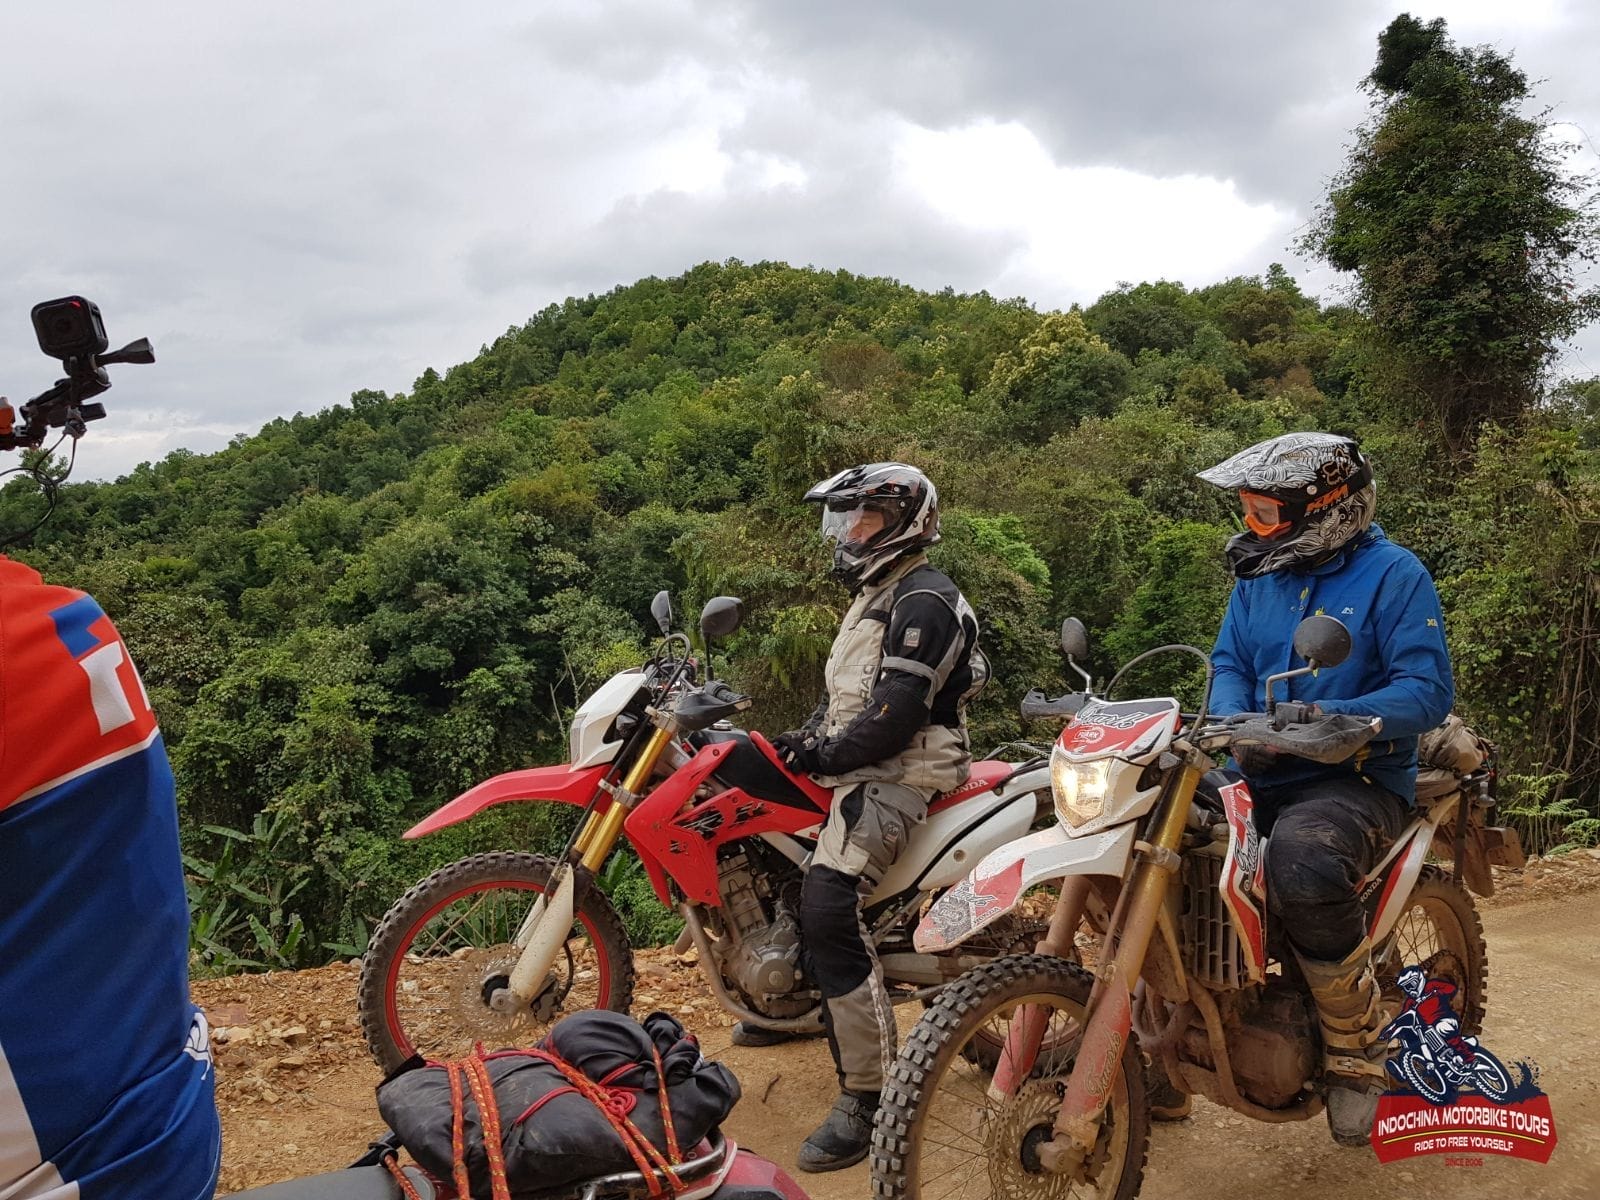 Laos Offroad Motorcycle Tour 5 - Grand Laos Motorbike Tour To Local Villages, Caves Via Luang Namtha